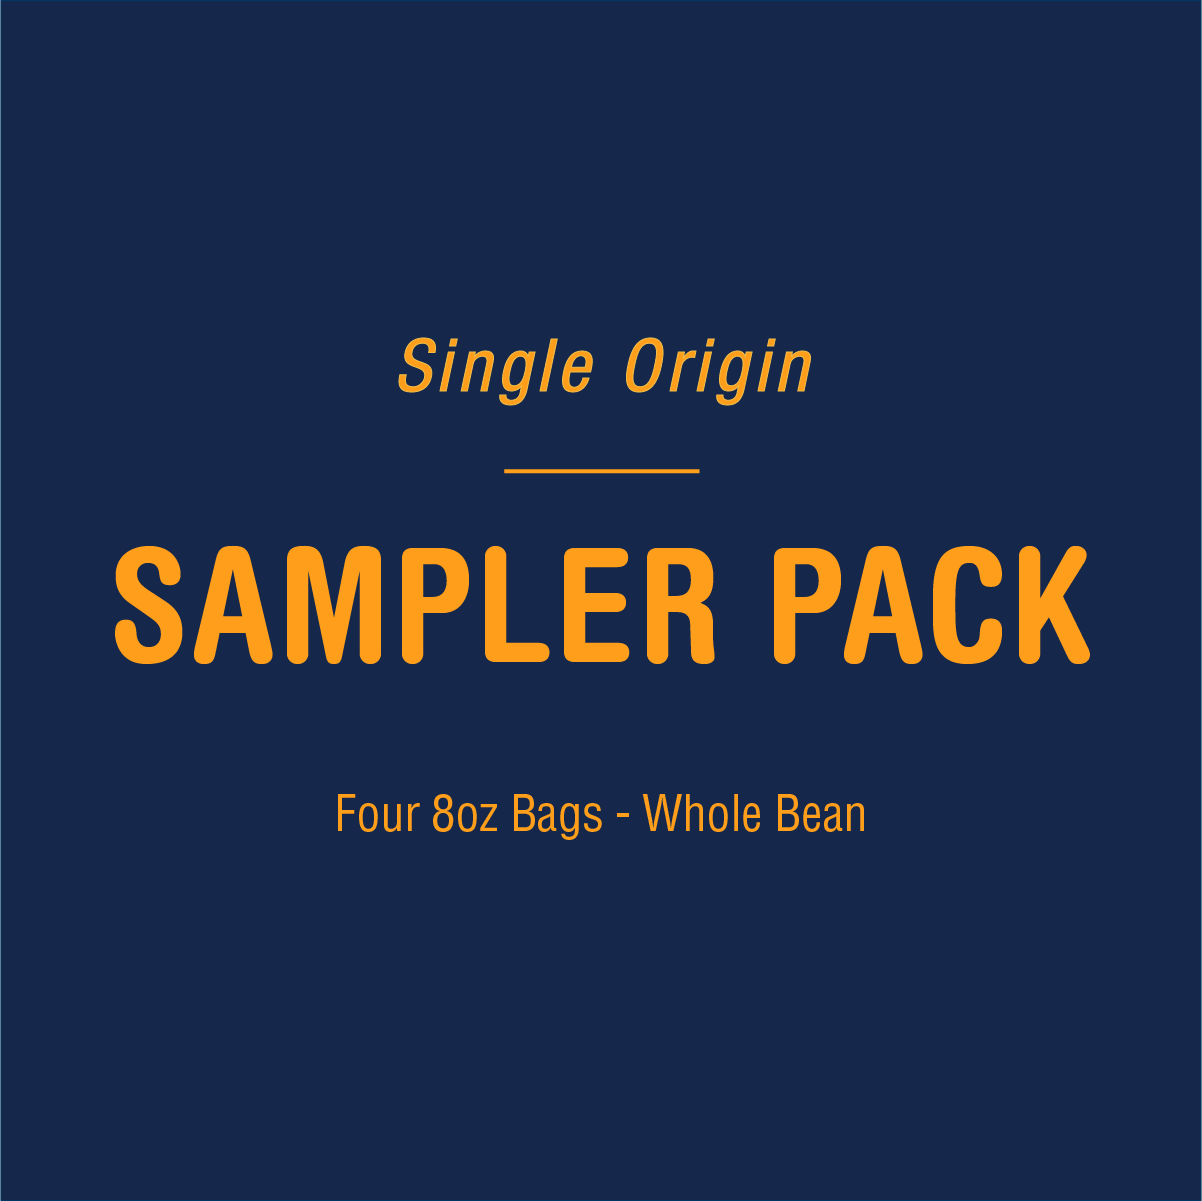 Single Origin Sampler Pack